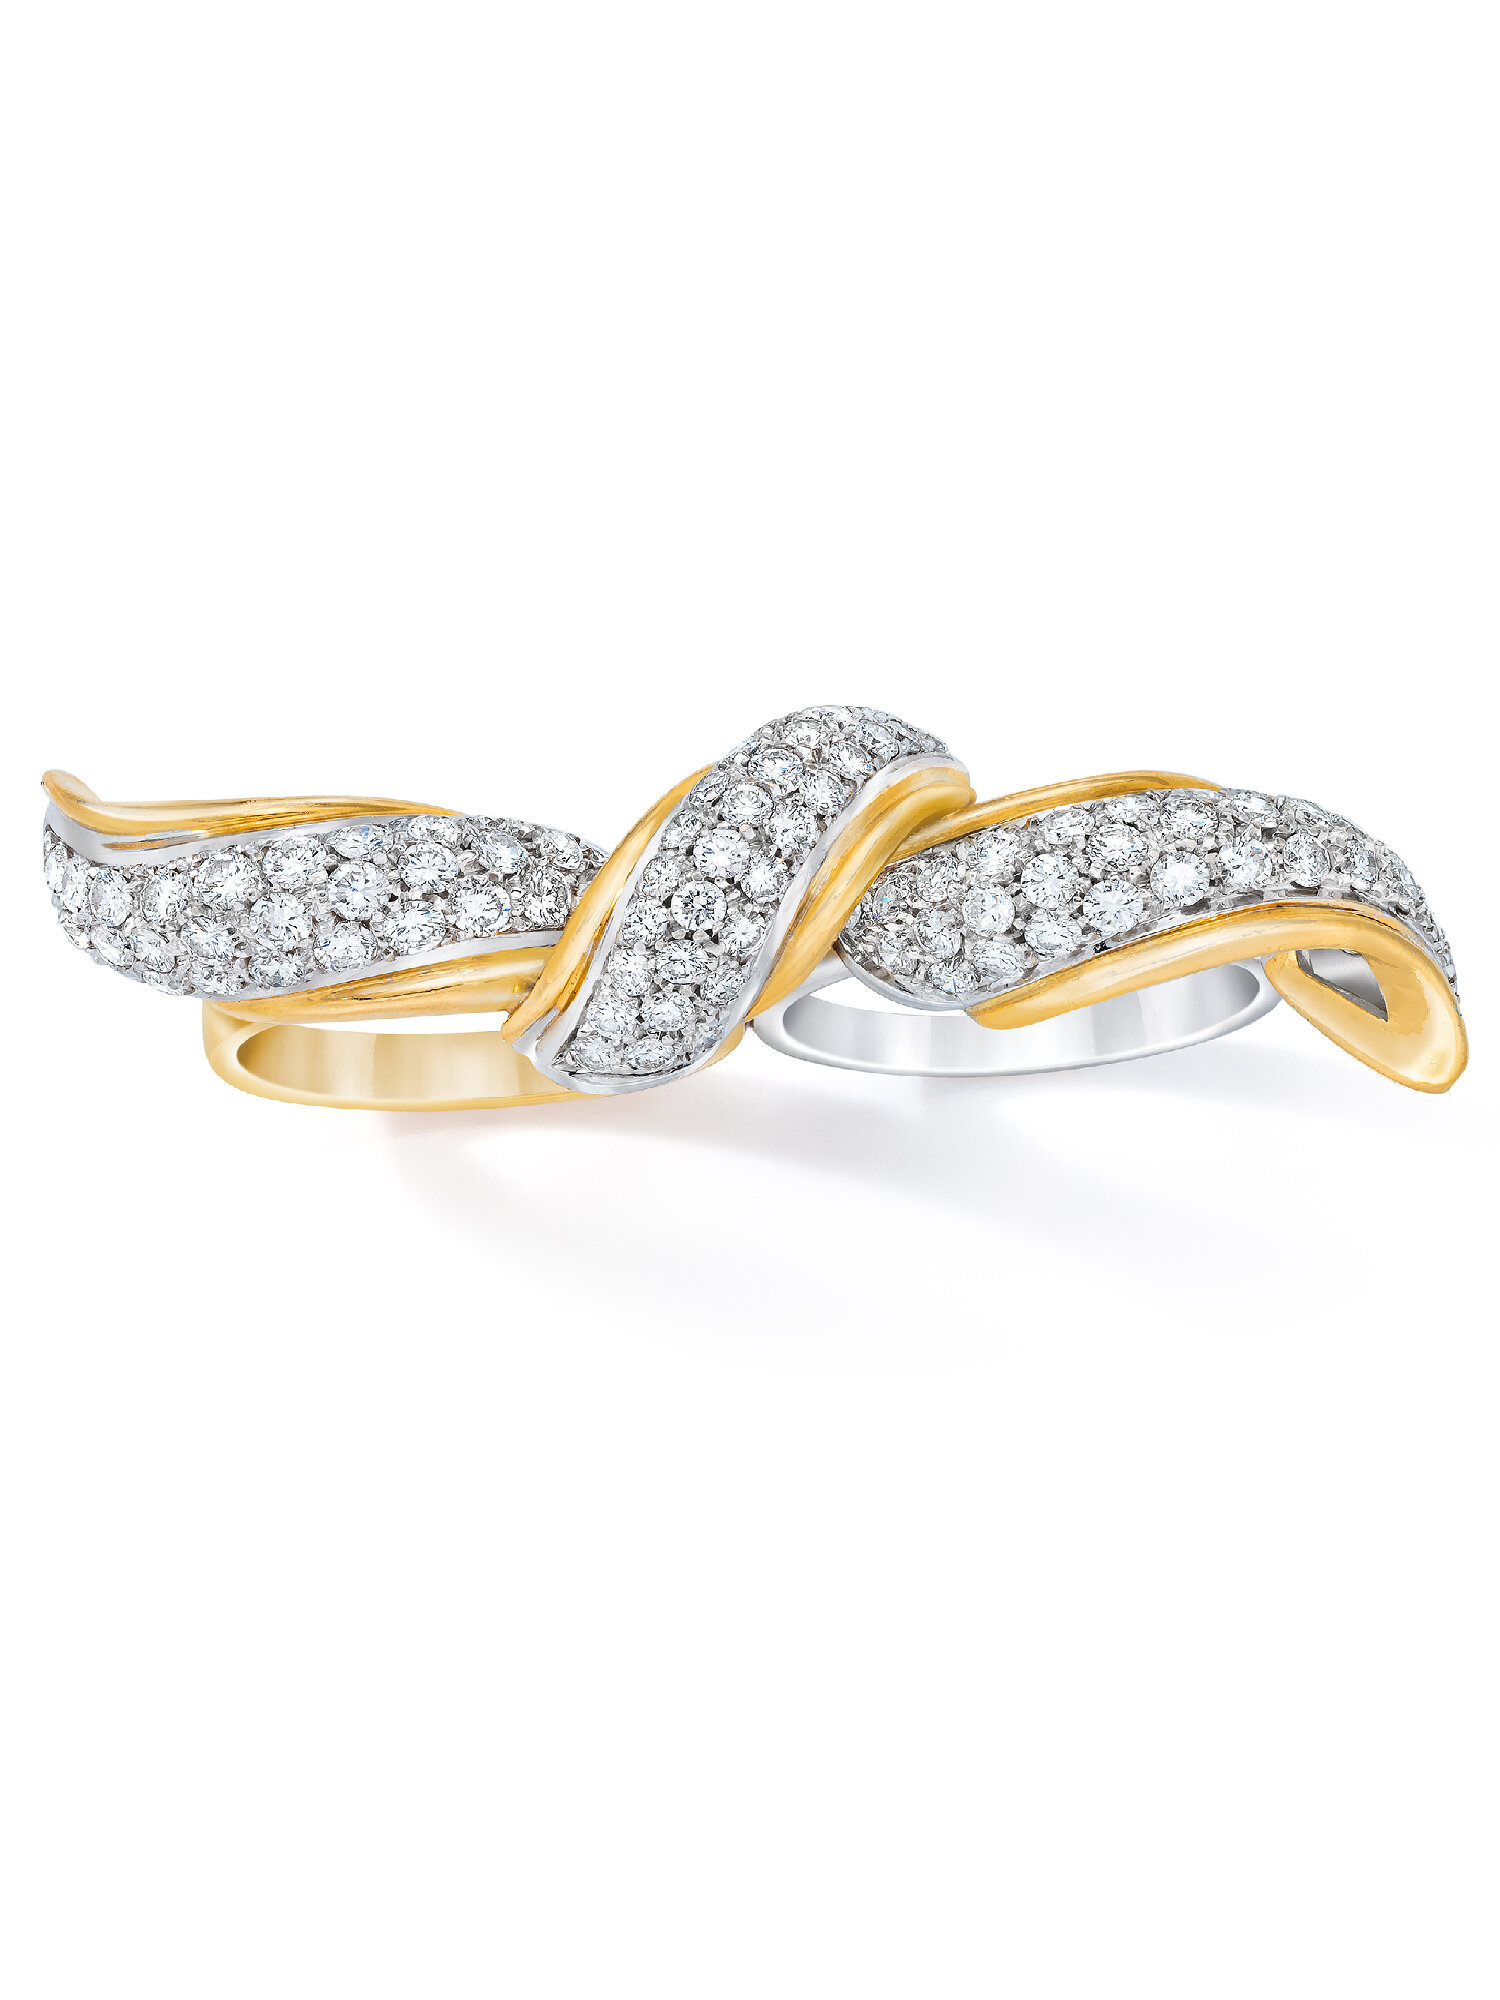 Pre-Owned White Diamond 10K Yellow Gold Bow Ring 1.00ctw - P26116 | JTV.com